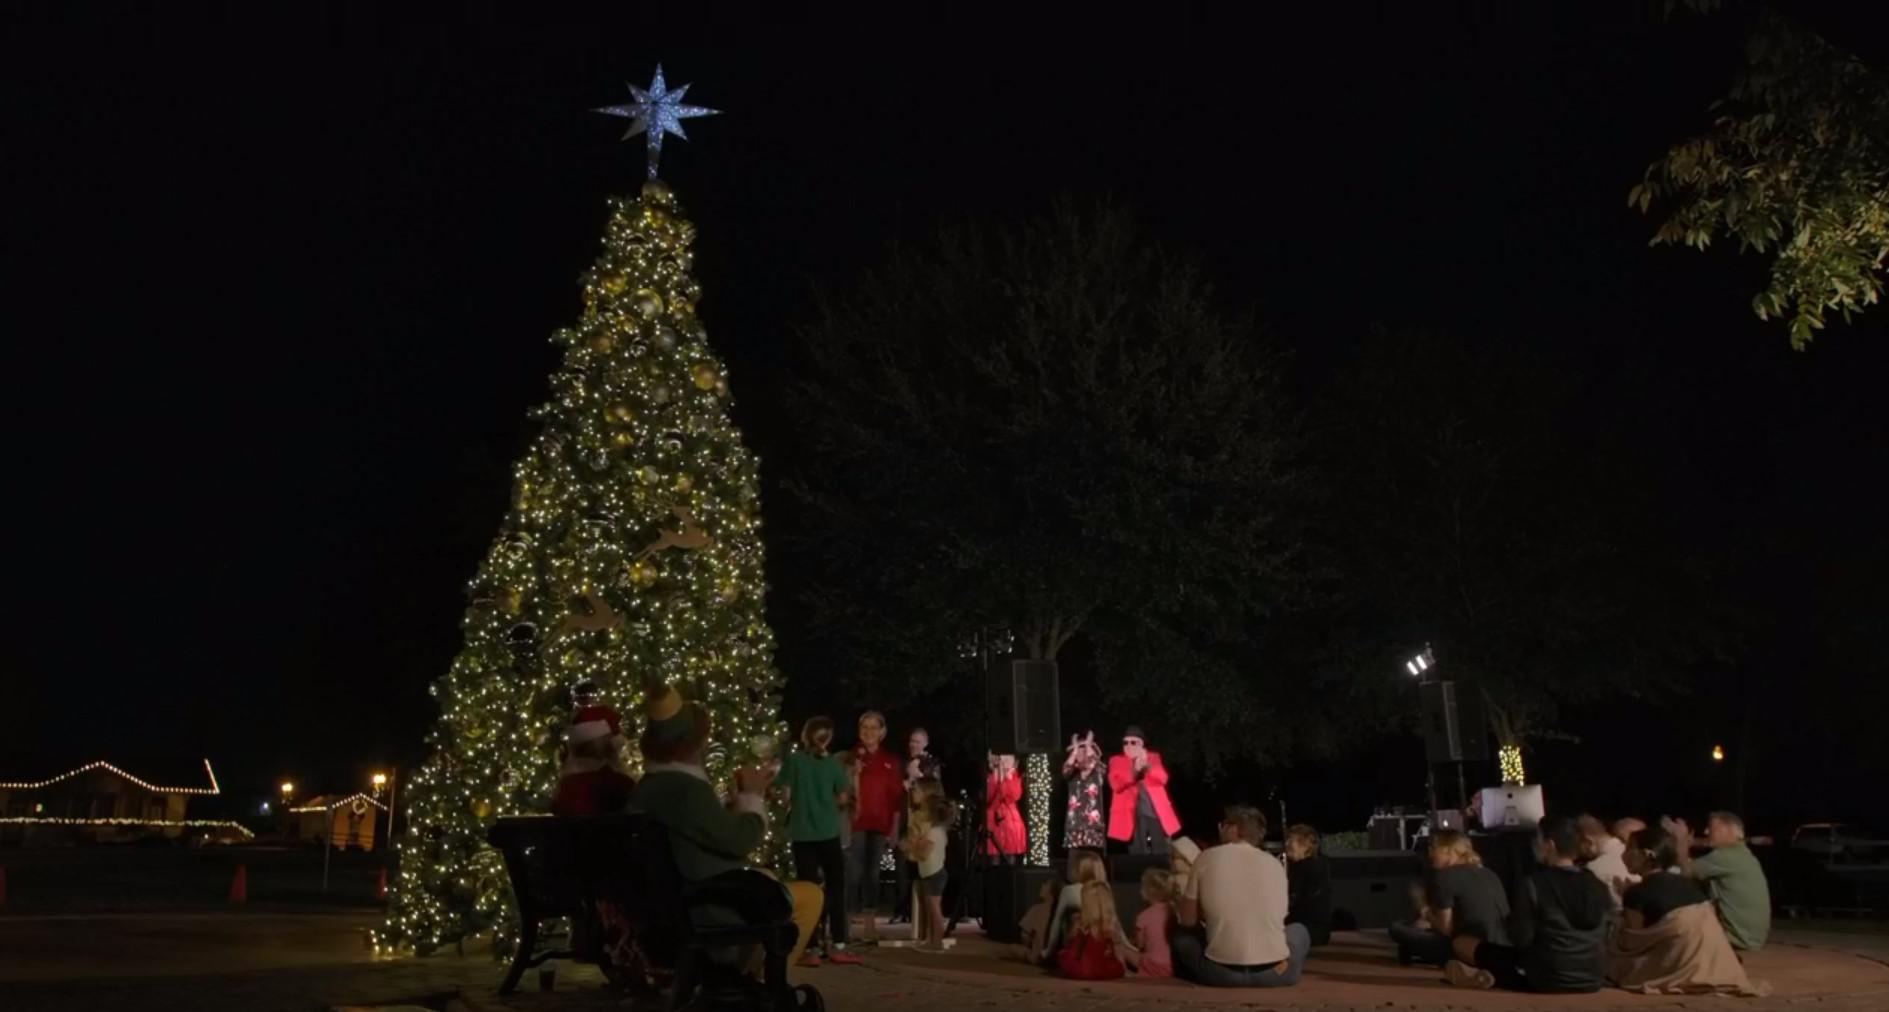 Tomball kicks off the holidays with virtual tree lighting ceremony